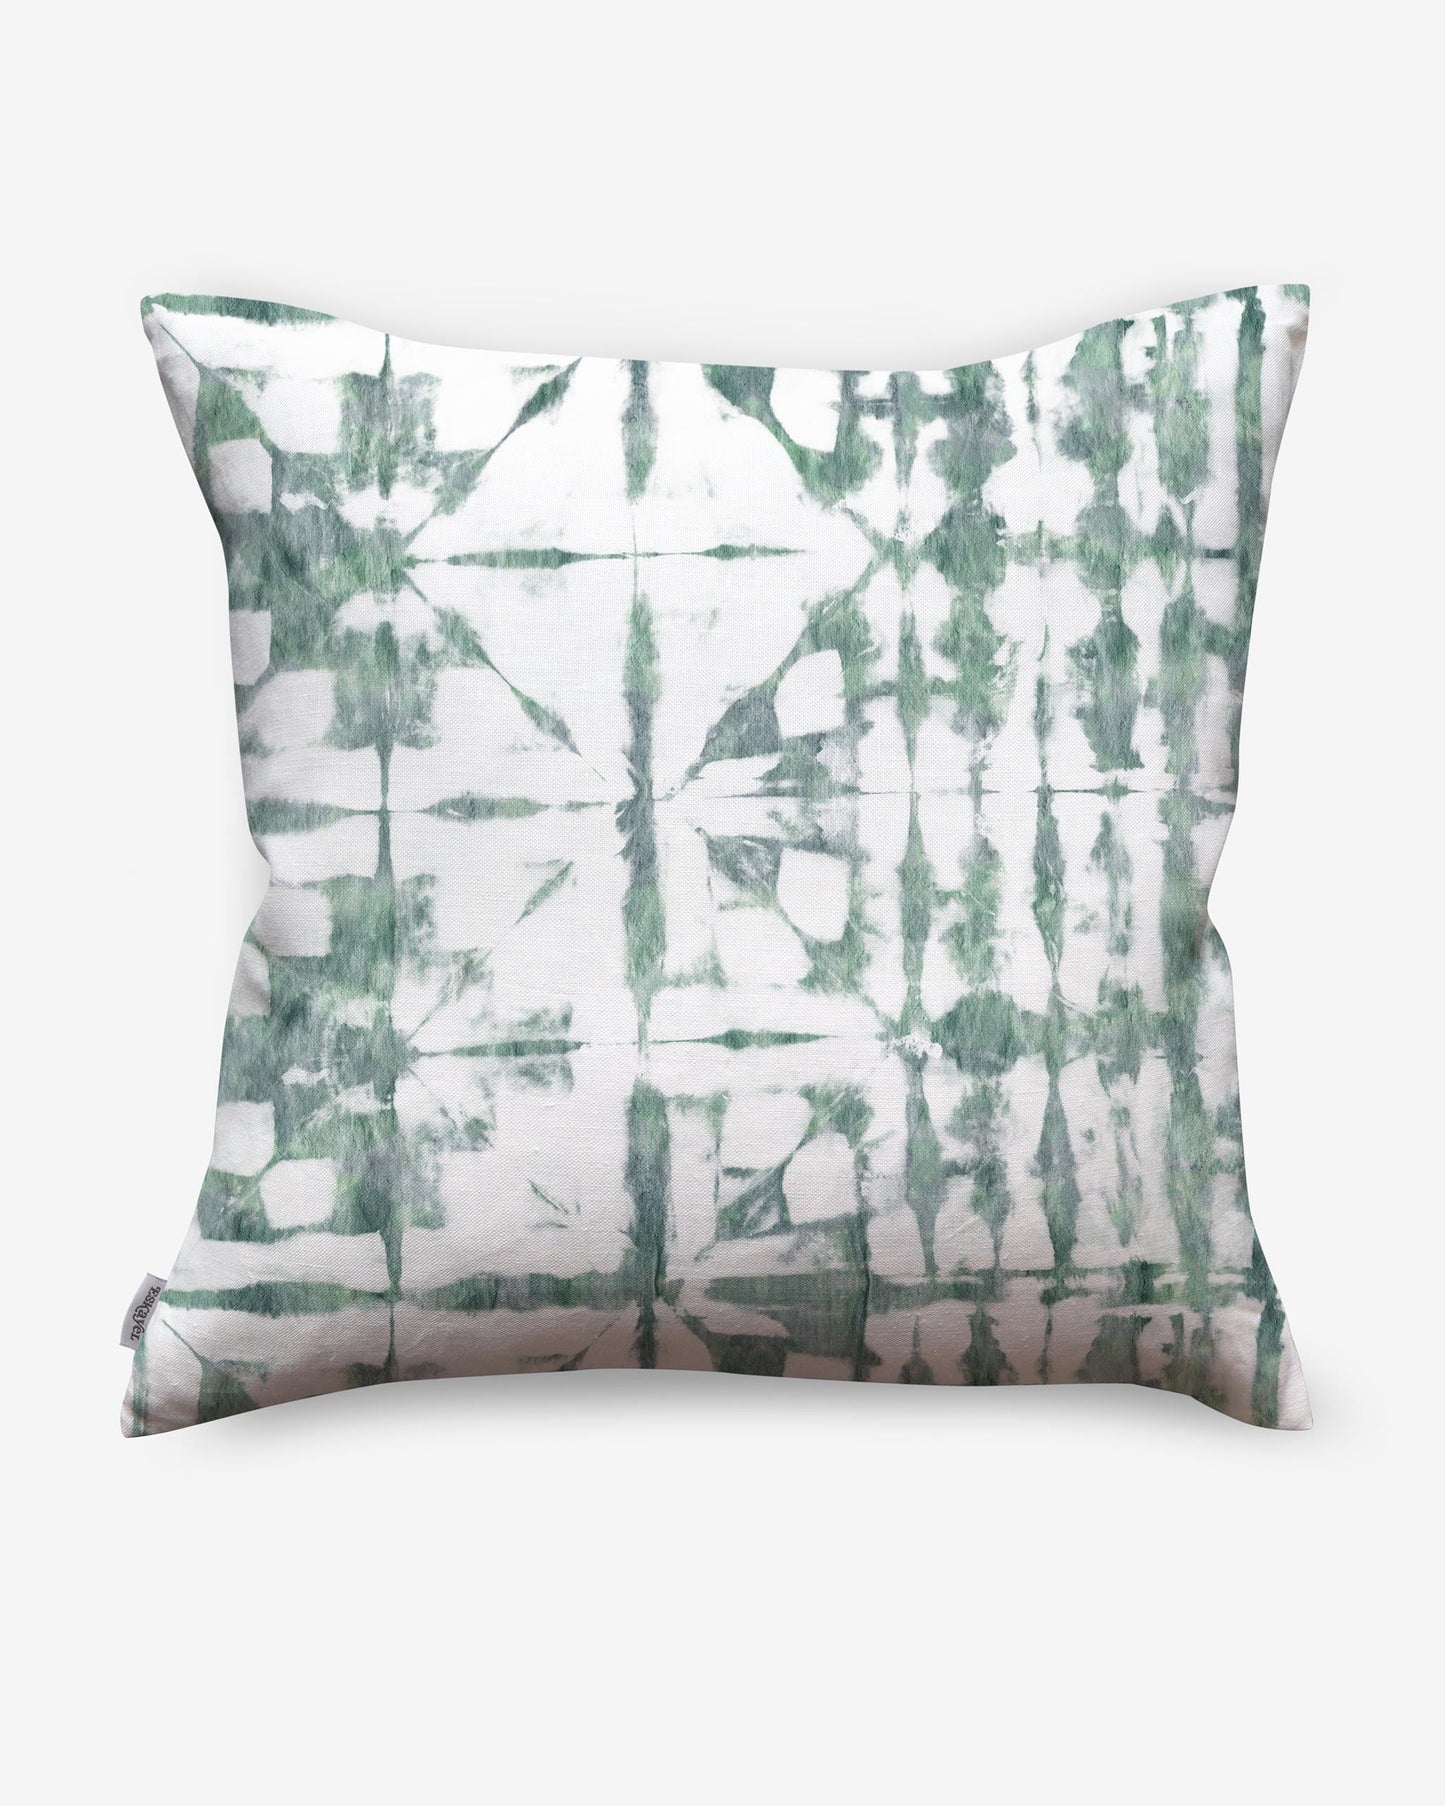 A green and white Banda Pillow Chloros with a tie-dye pattern by Eskayel